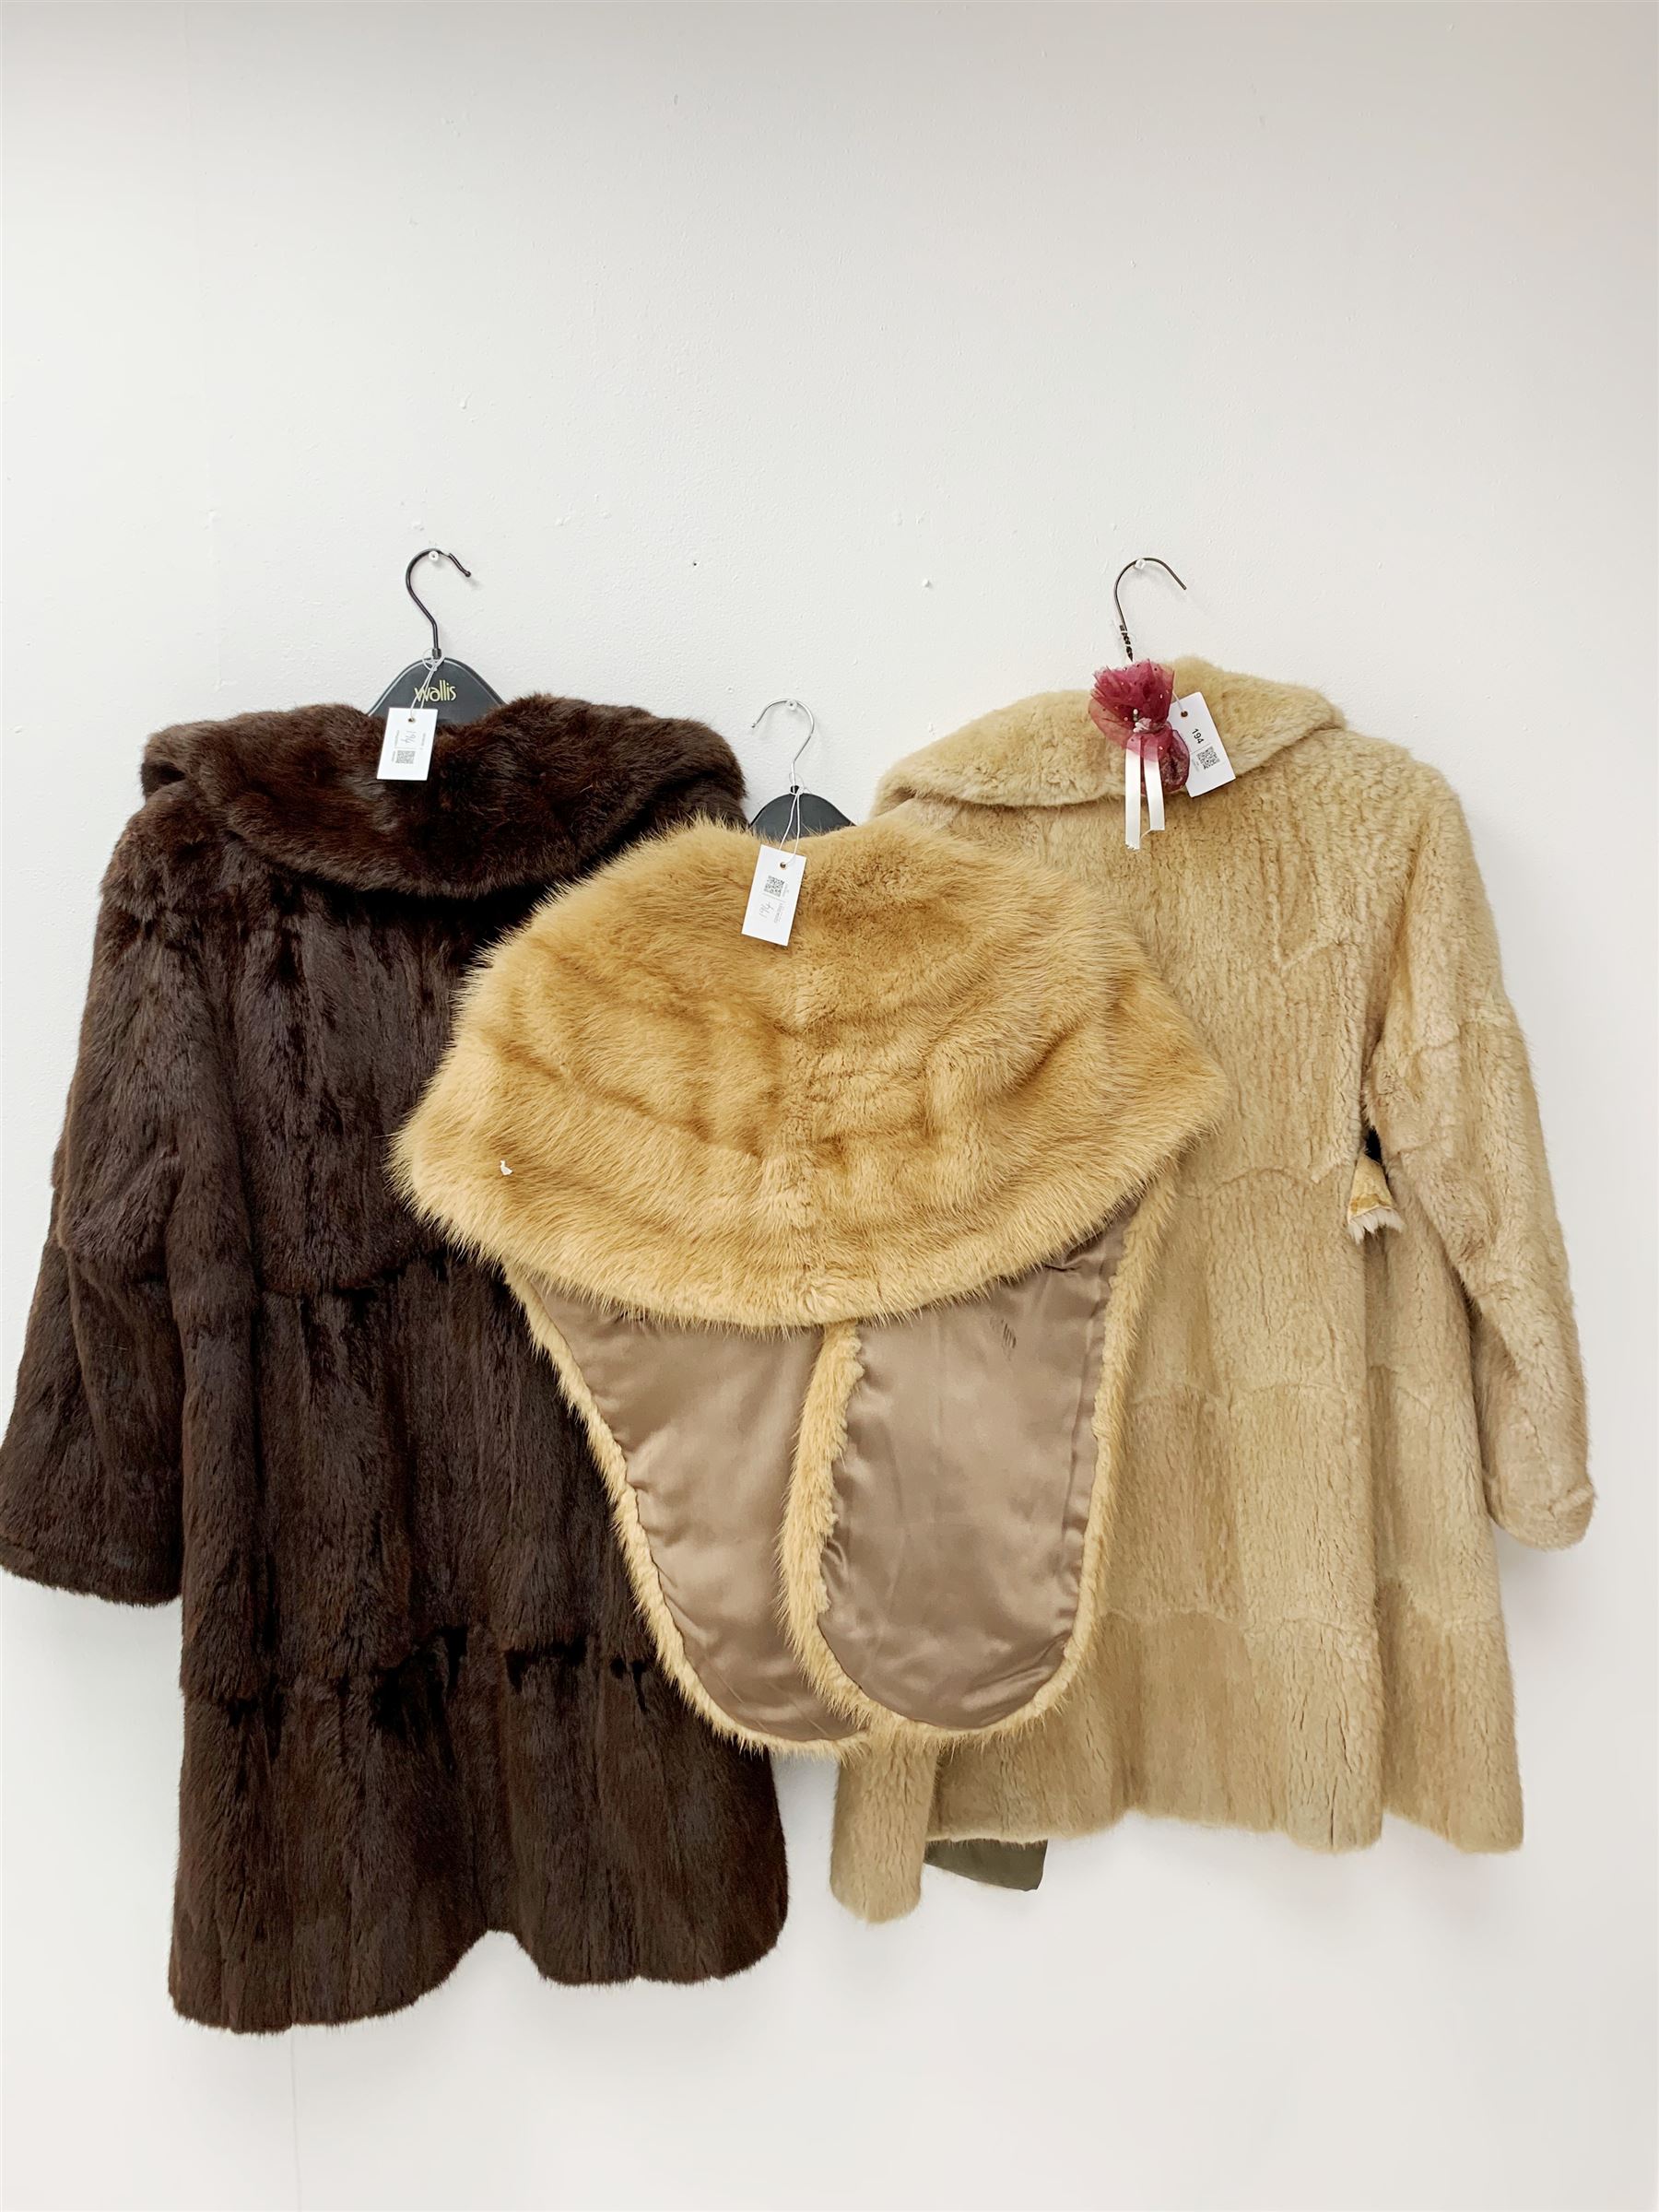 Vintage dark mink coat of three-quarter length - Image 3 of 3